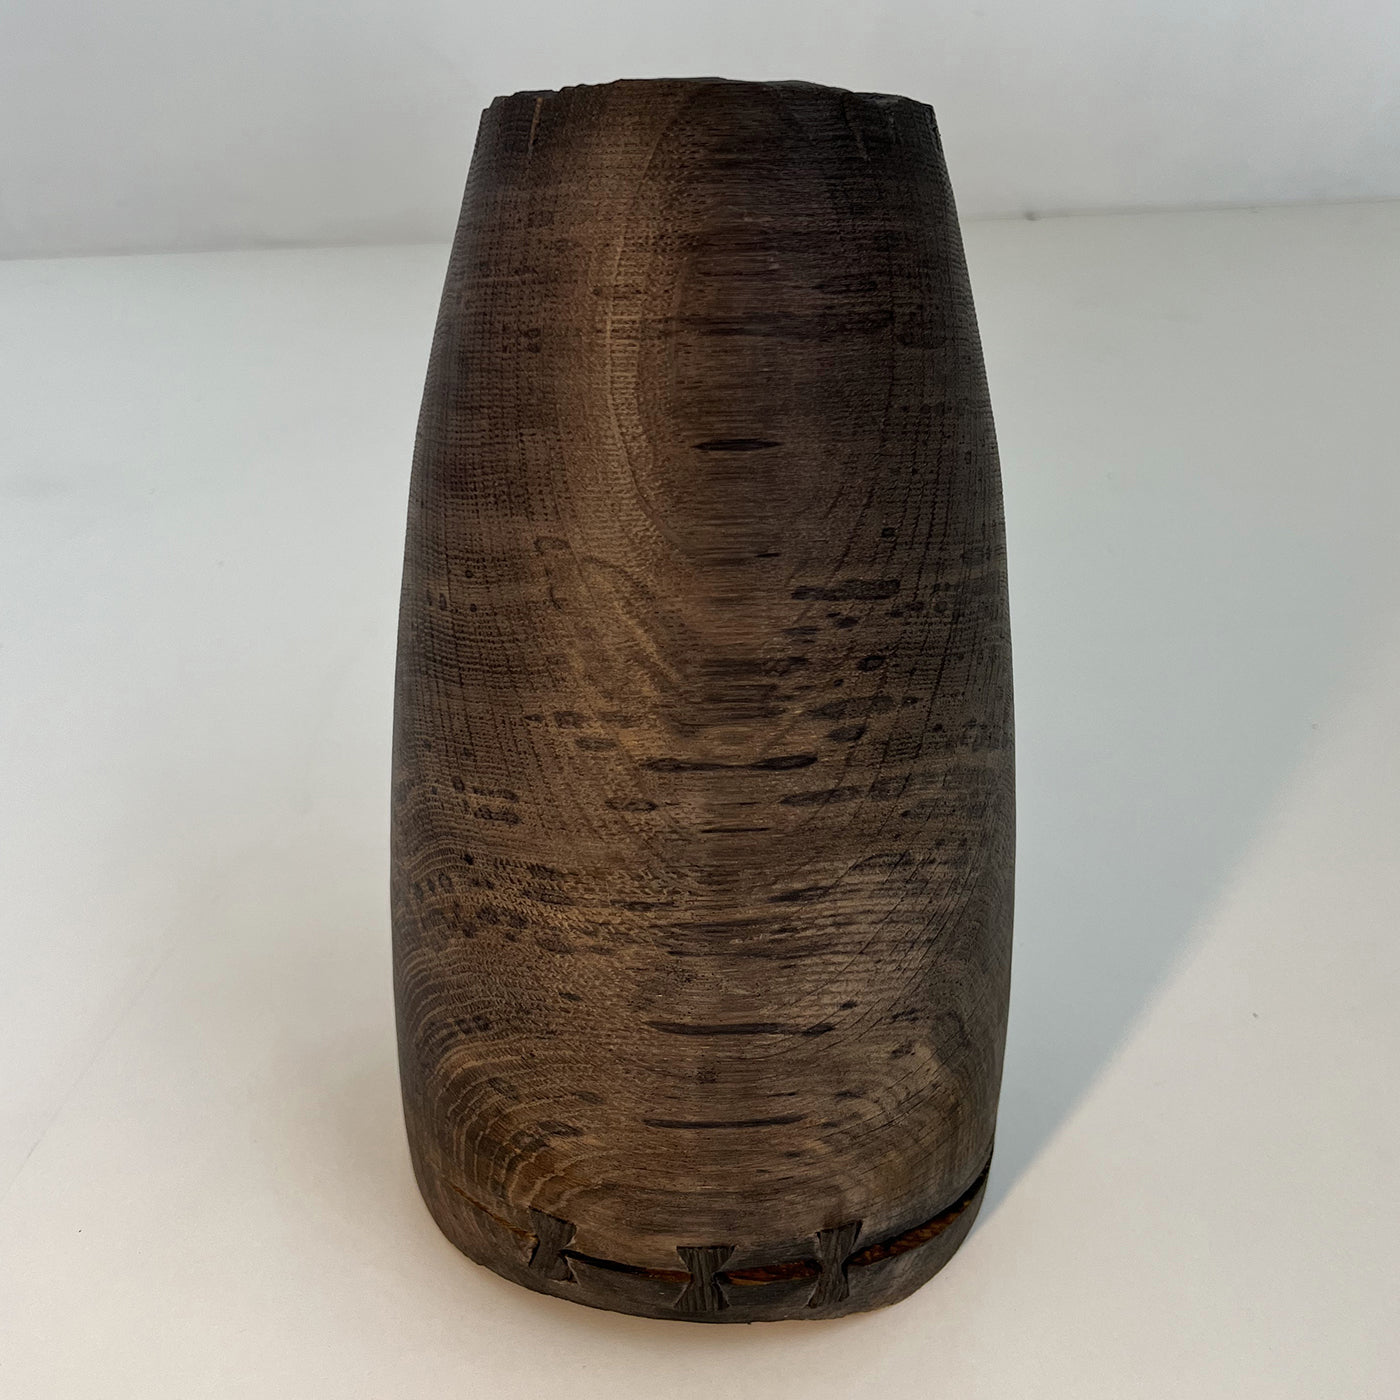 Fossil Oak Hollow Vase #2 - Alternative view 2